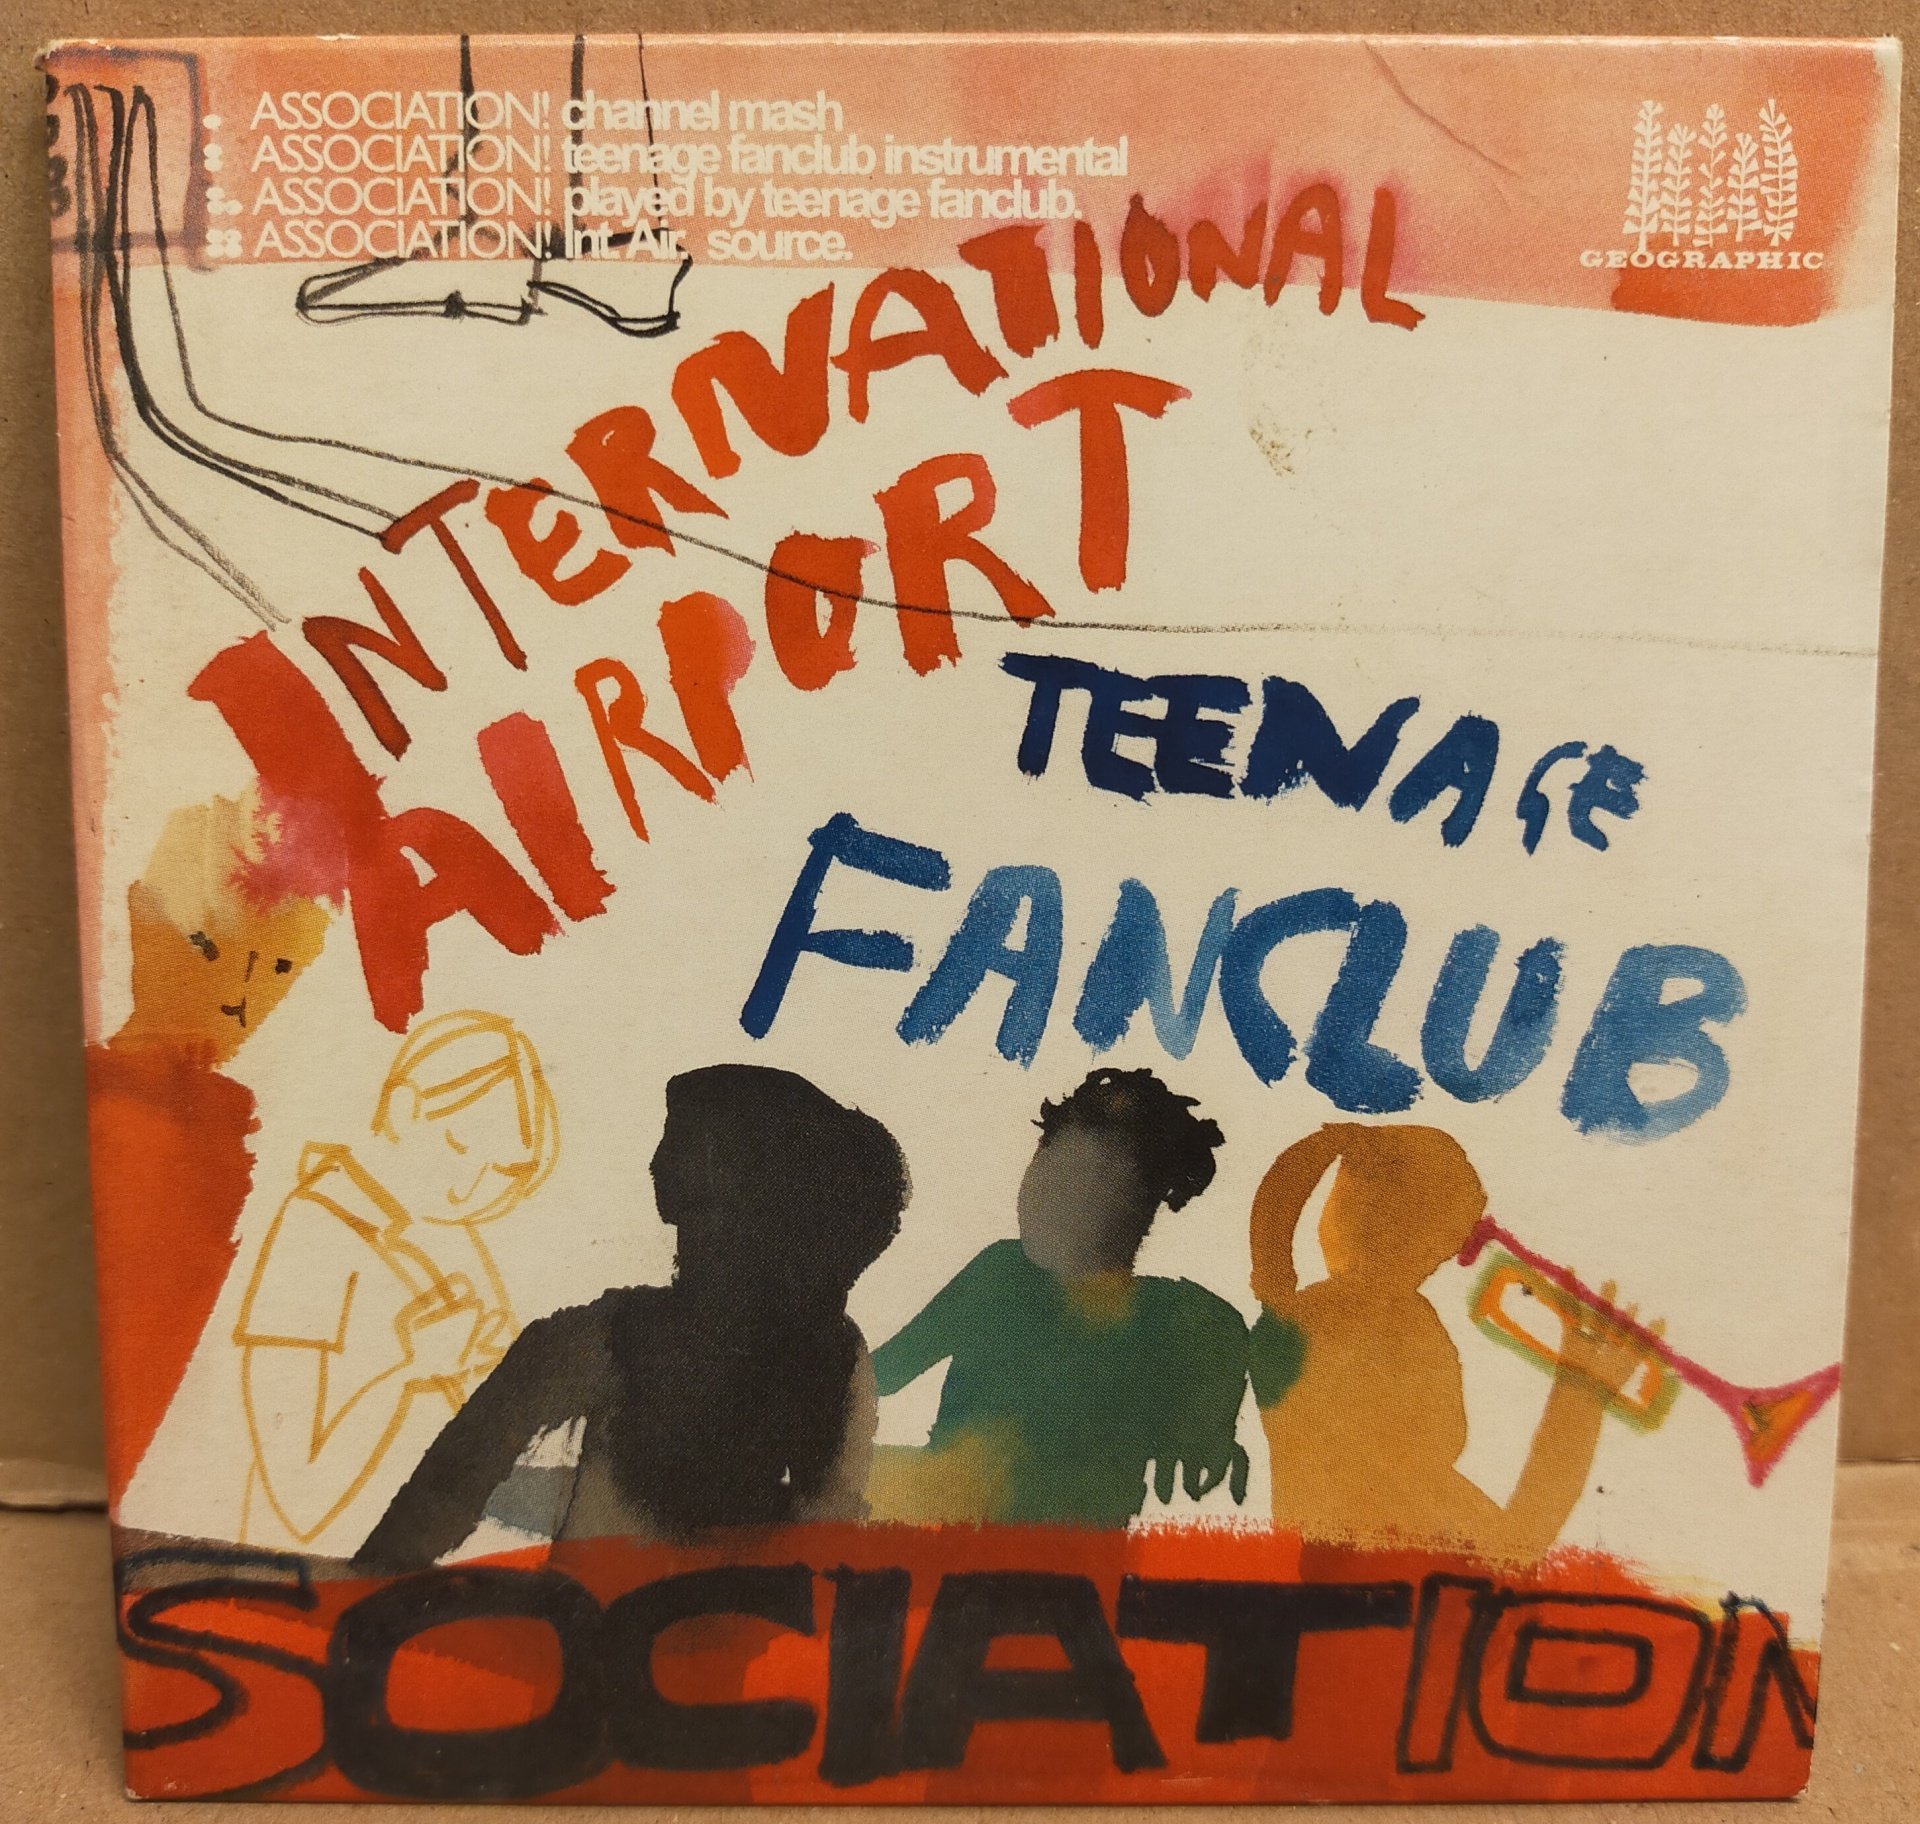 INTERNATIONAL AIRPORT / TEENAGE FANCLUB – ASSOCIATION! (2004) - CARDSLEEVE CD SINGLE 2.EL